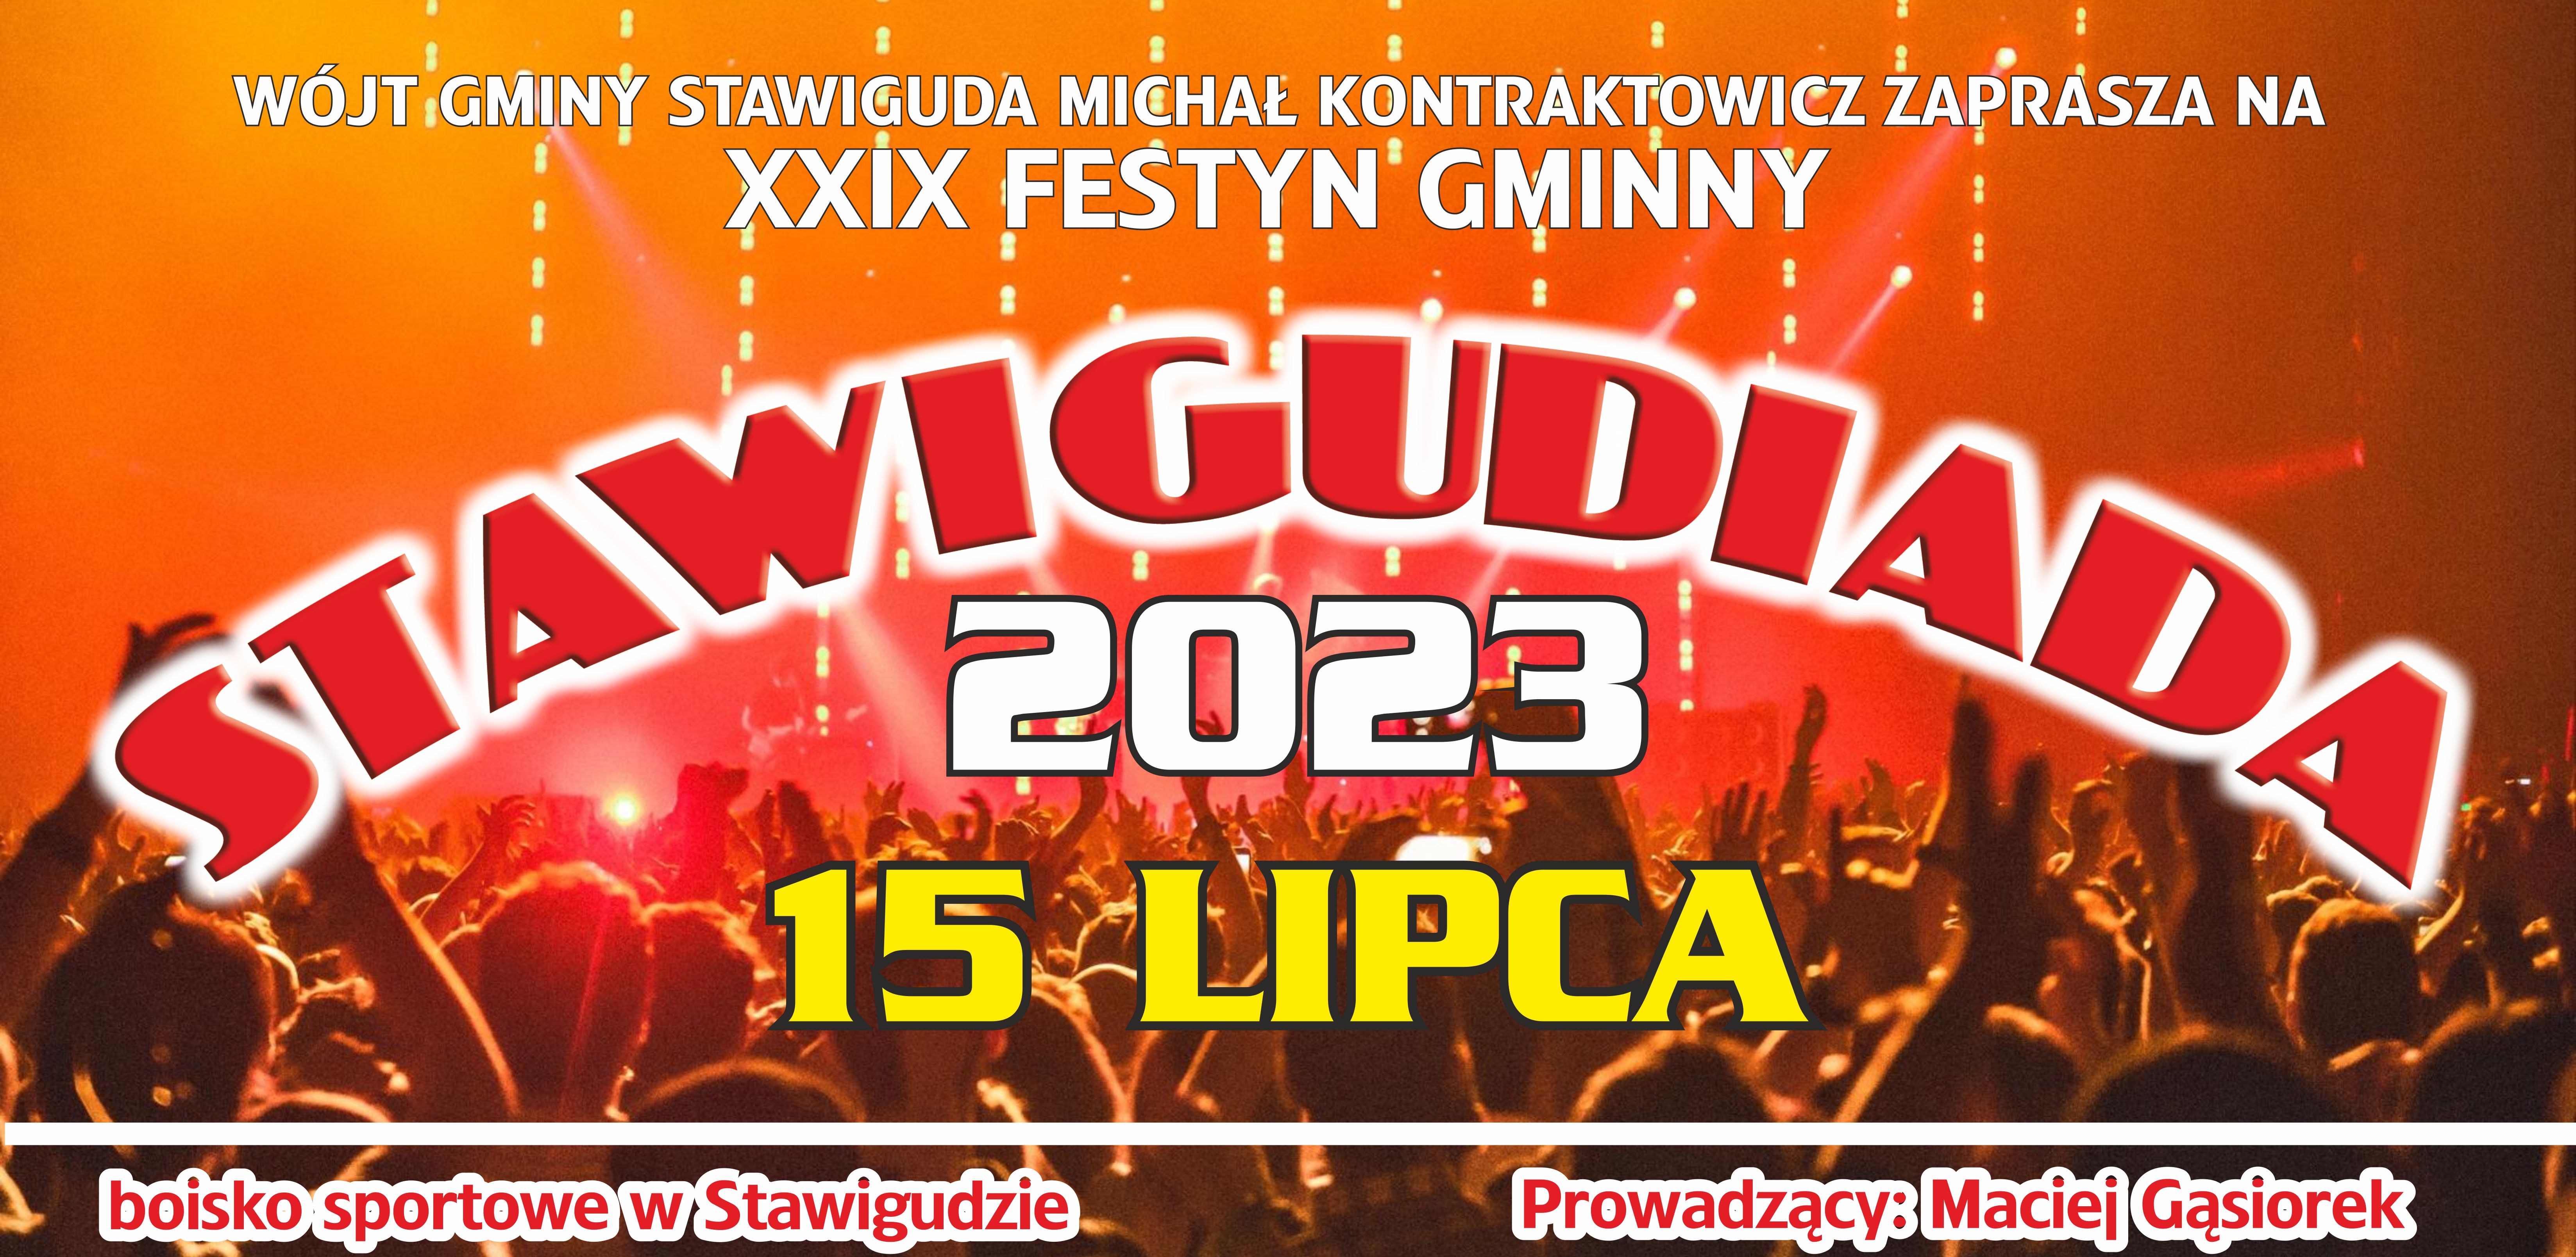 XXIX Festyn Gminny STAWIGUDIADA 2023